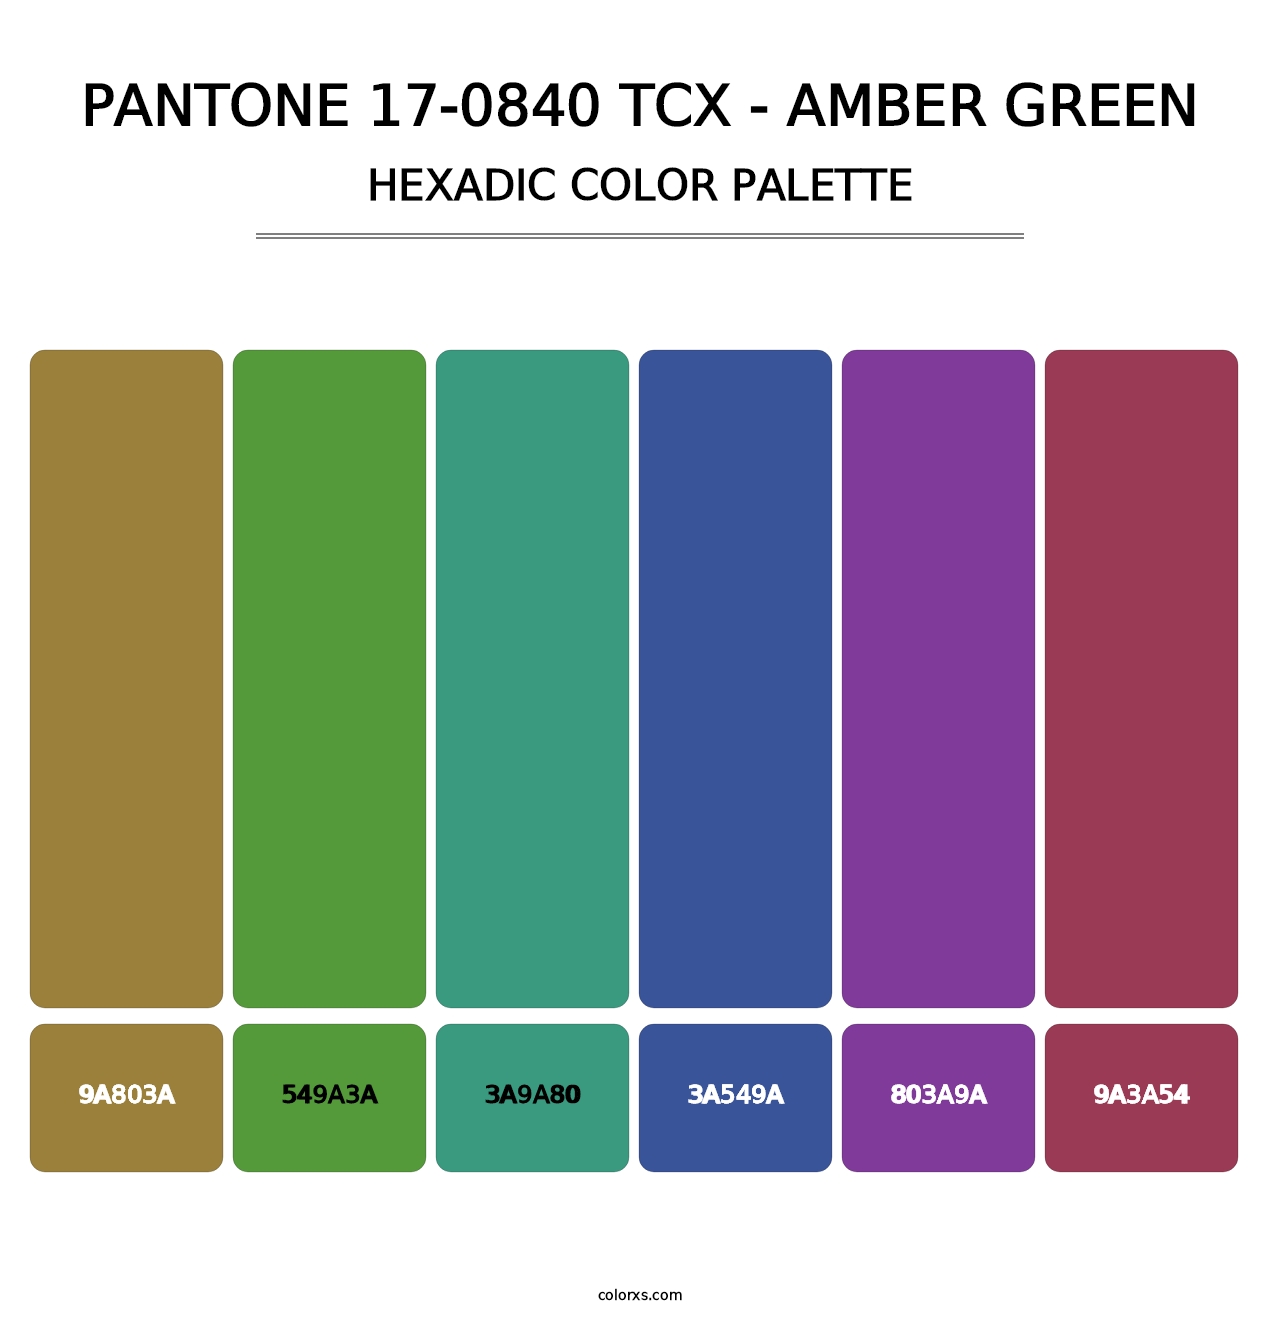 PANTONE 17-0840 TCX - Amber Green - Hexadic Color Palette